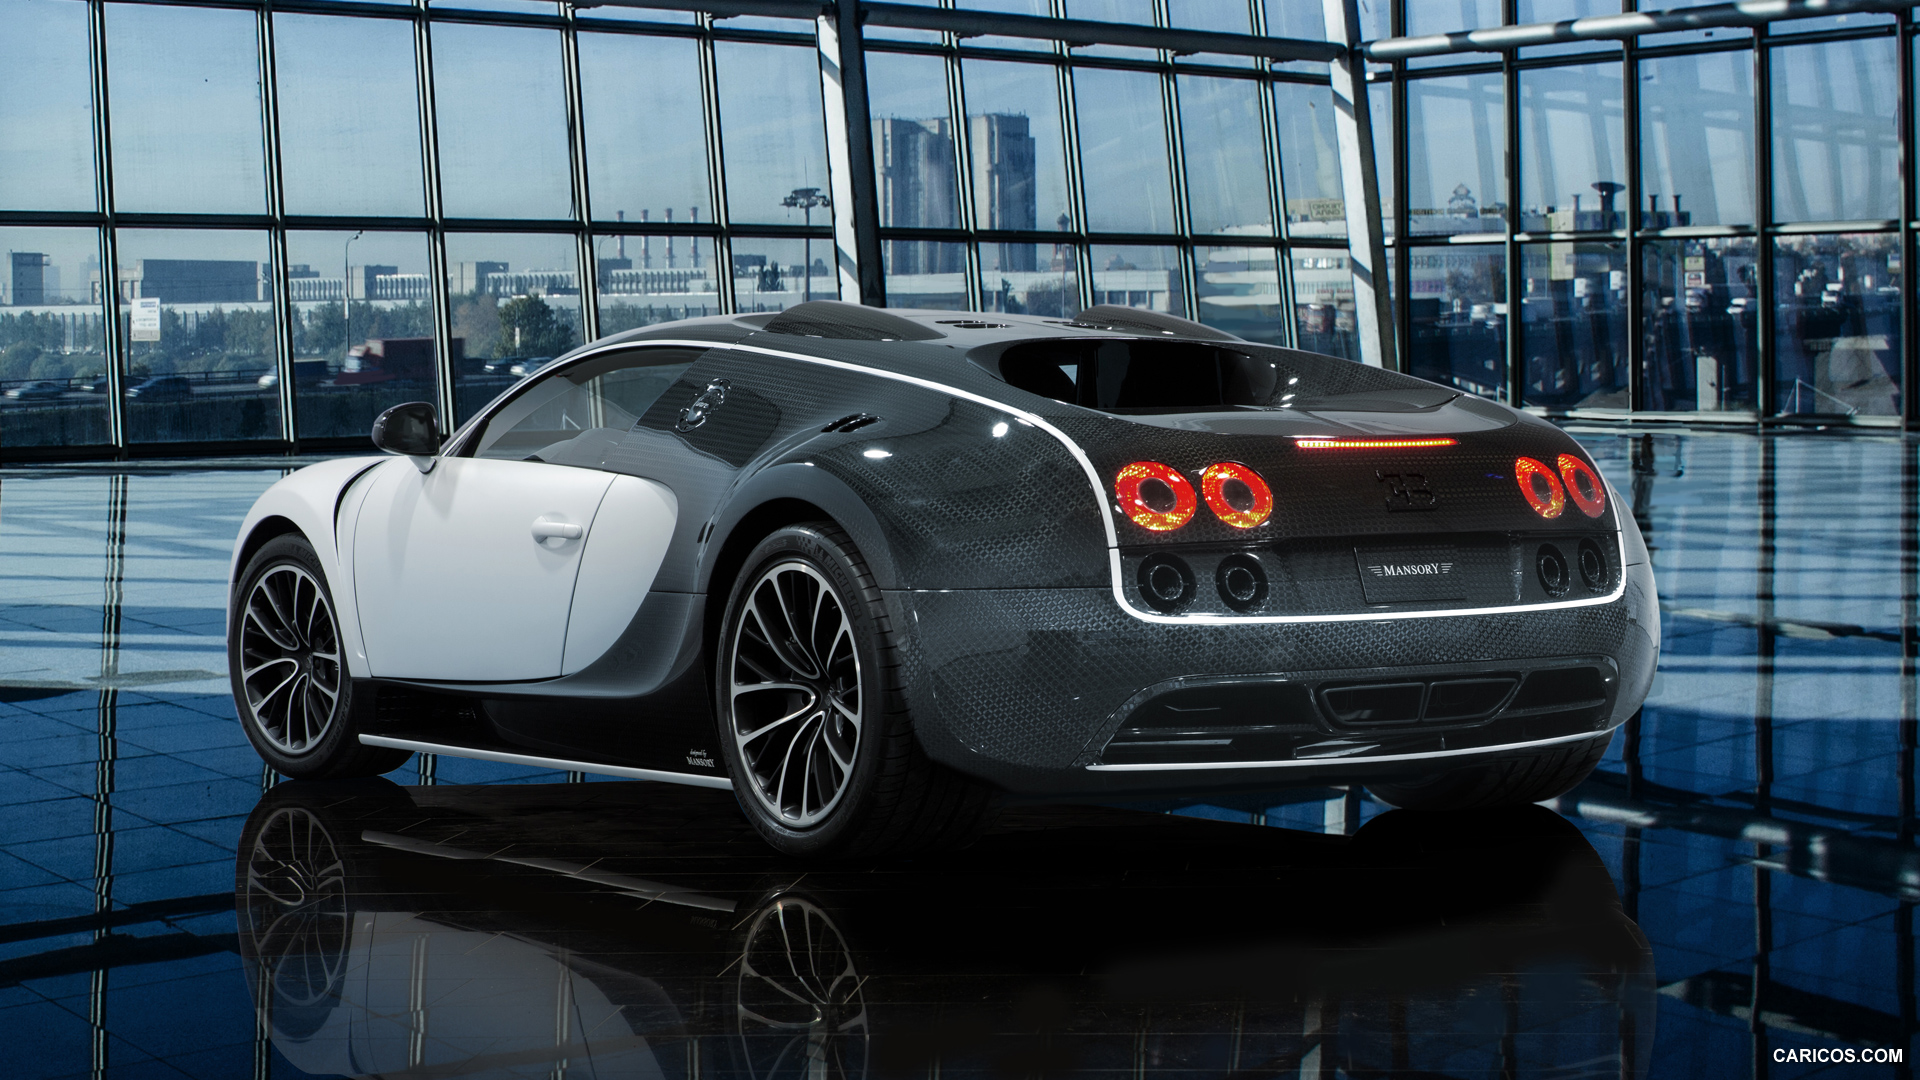 2014 Mansory Vivere based on Bugatti Veyron 16.4  - Rear, #2 of 8